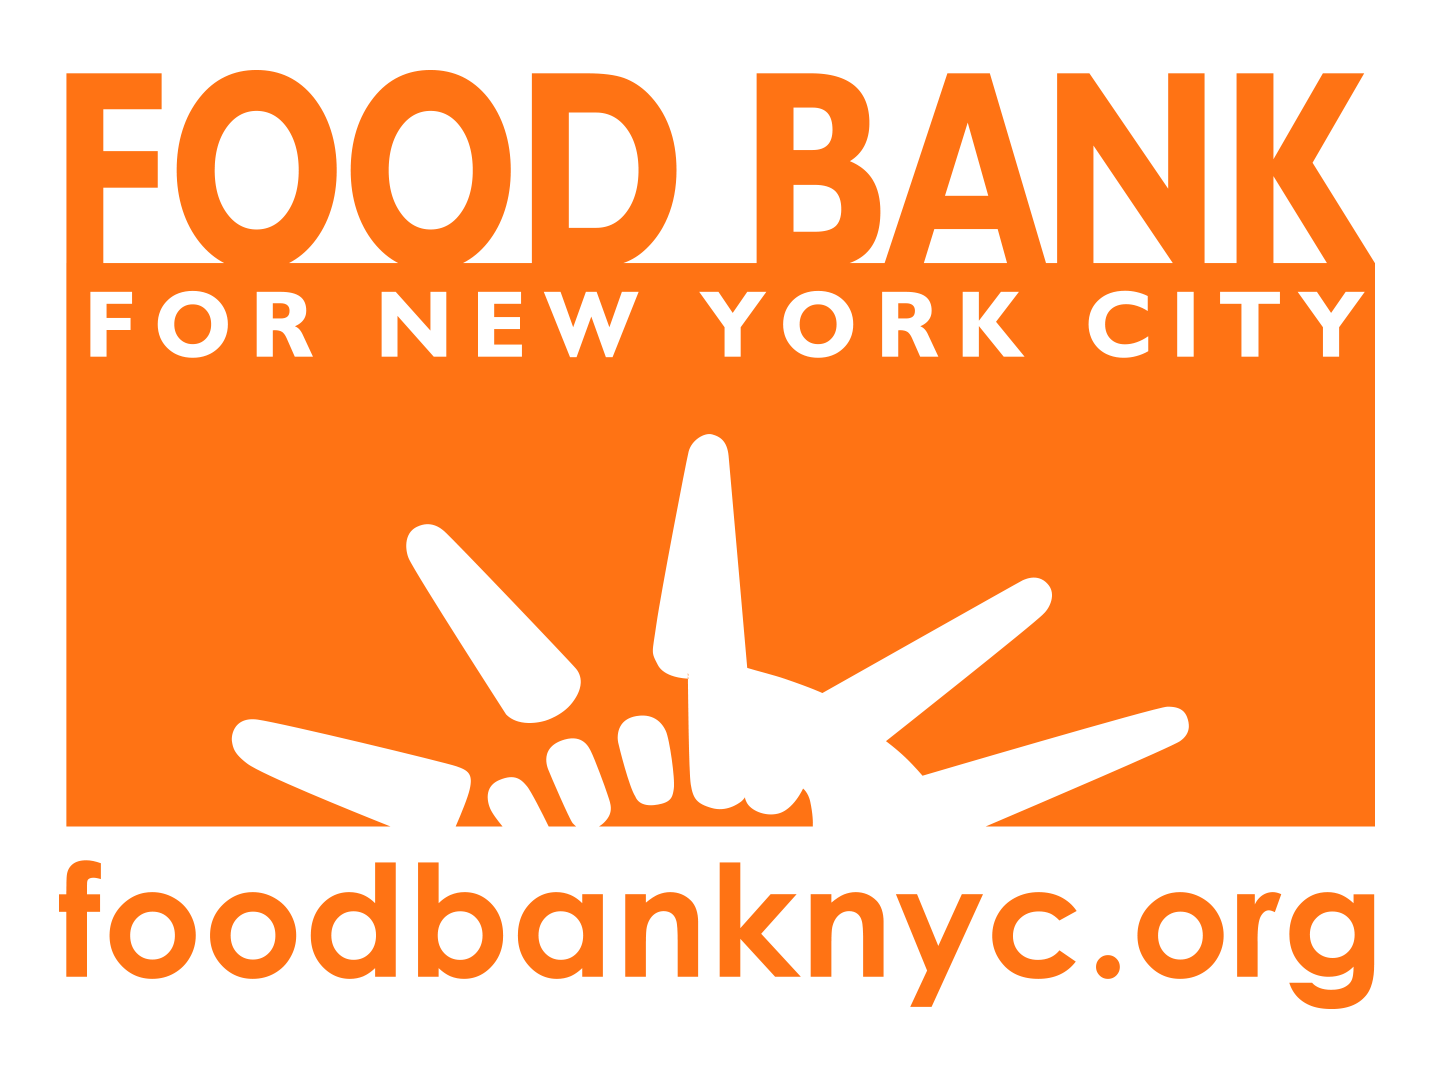 Food Bank for NYC